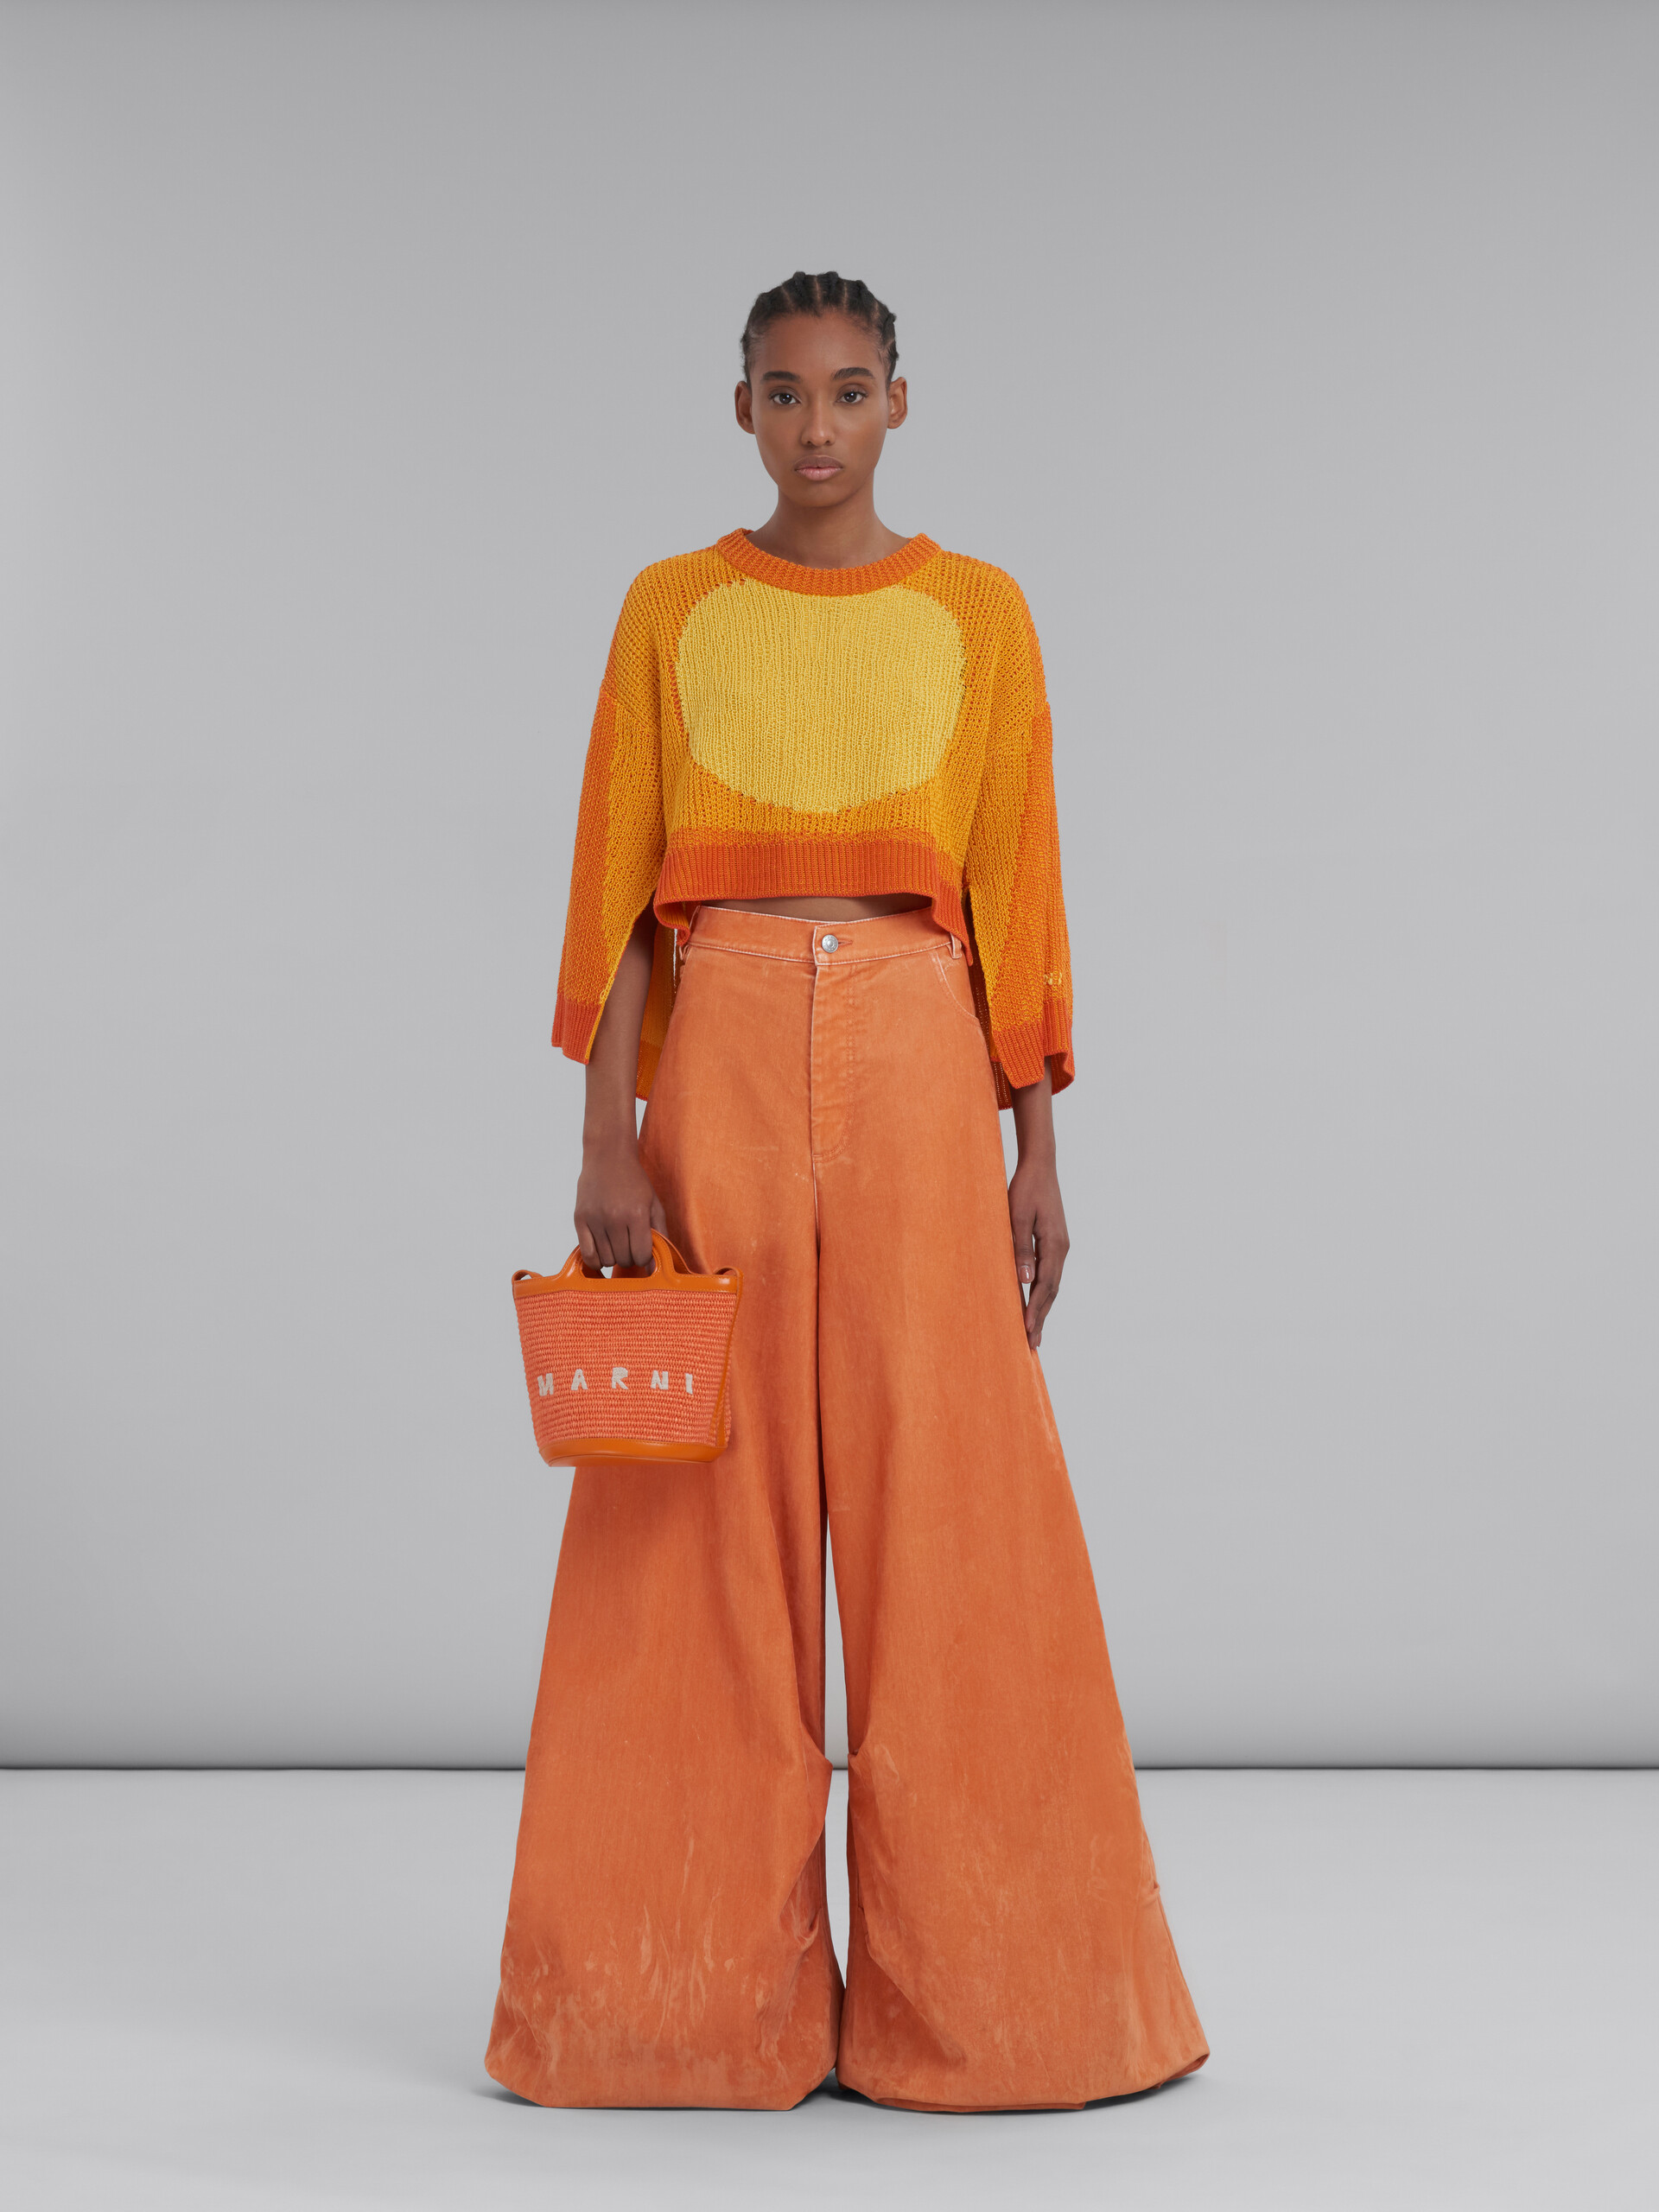 Tropicalia Small Bucket Bag in orange leather and raffia - Shoulder Bag - Image 2